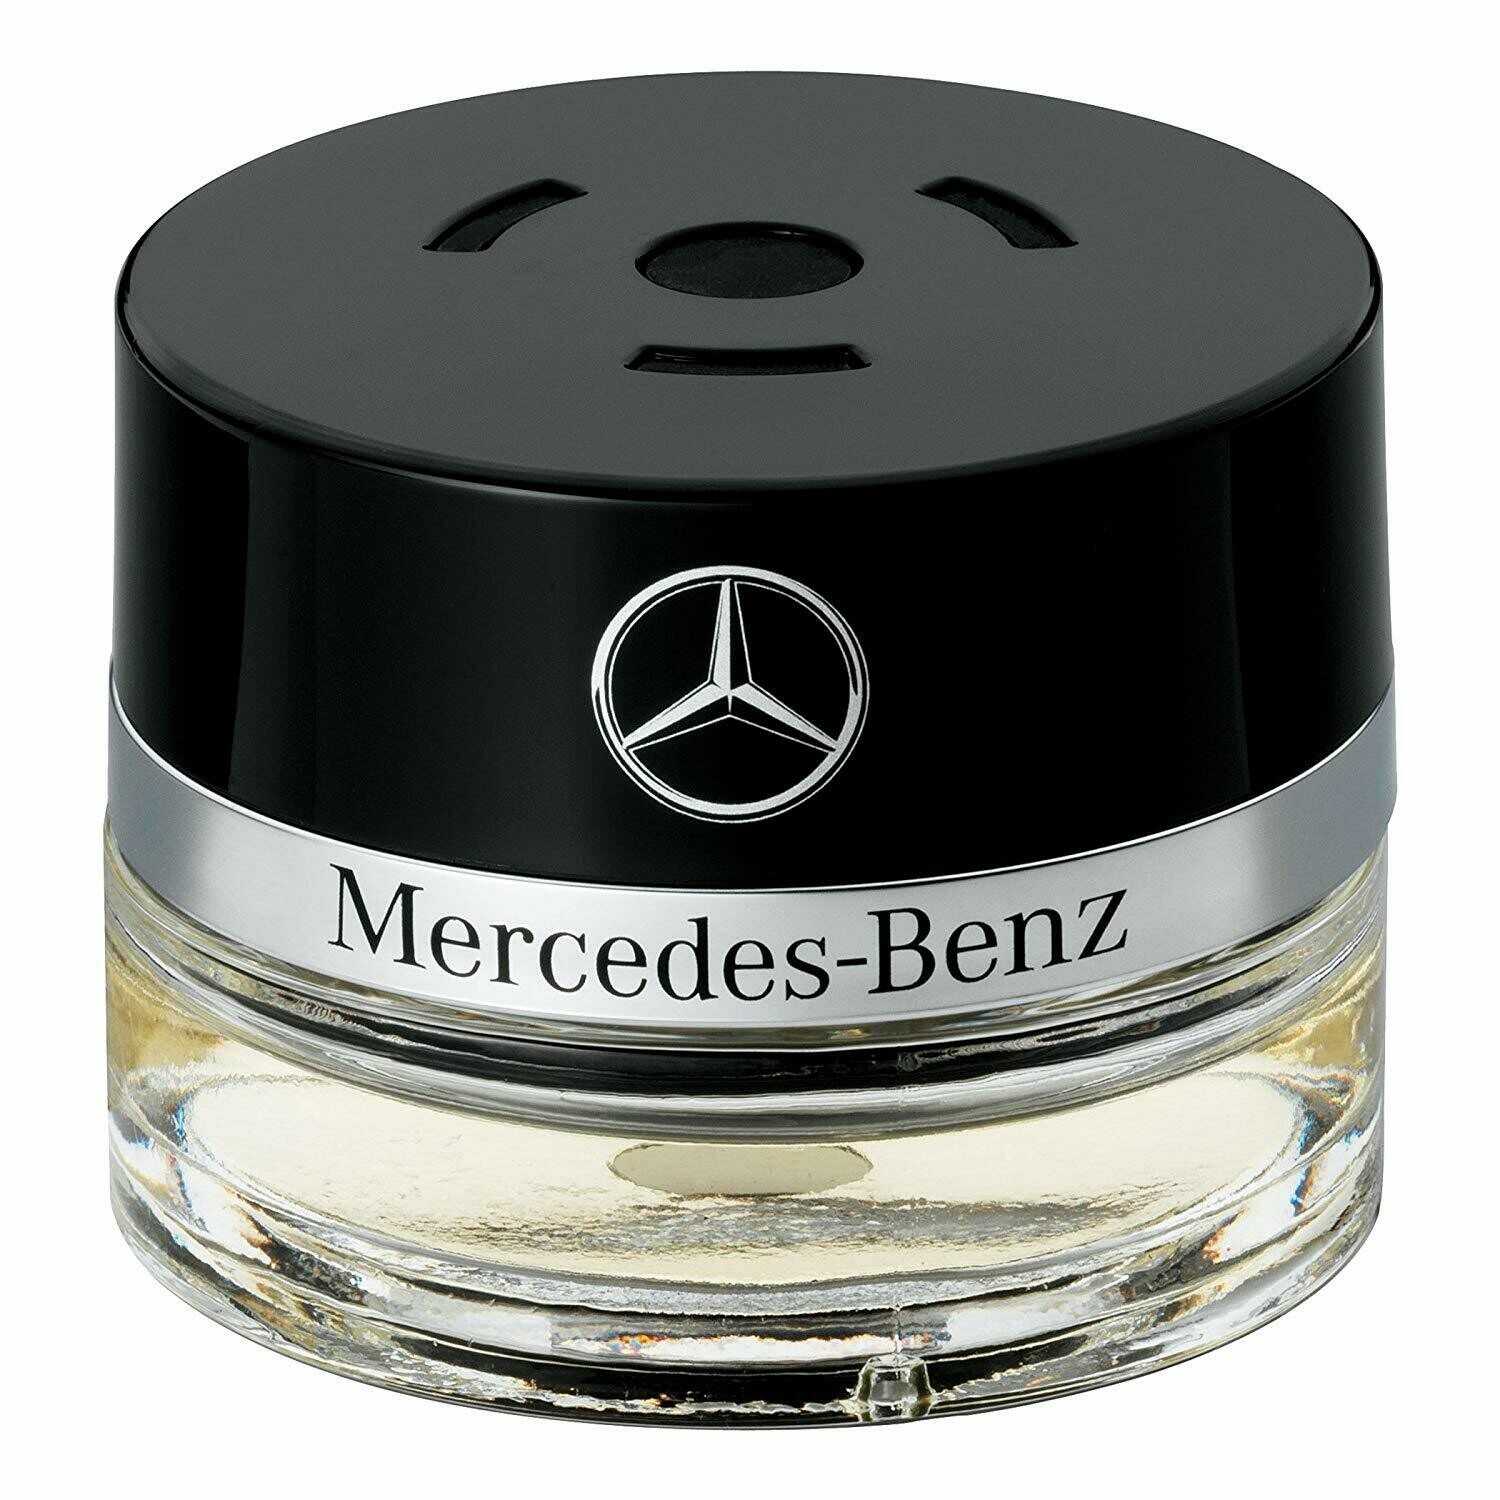 Mercedes-Benz Air Spencer Nightlife Mood